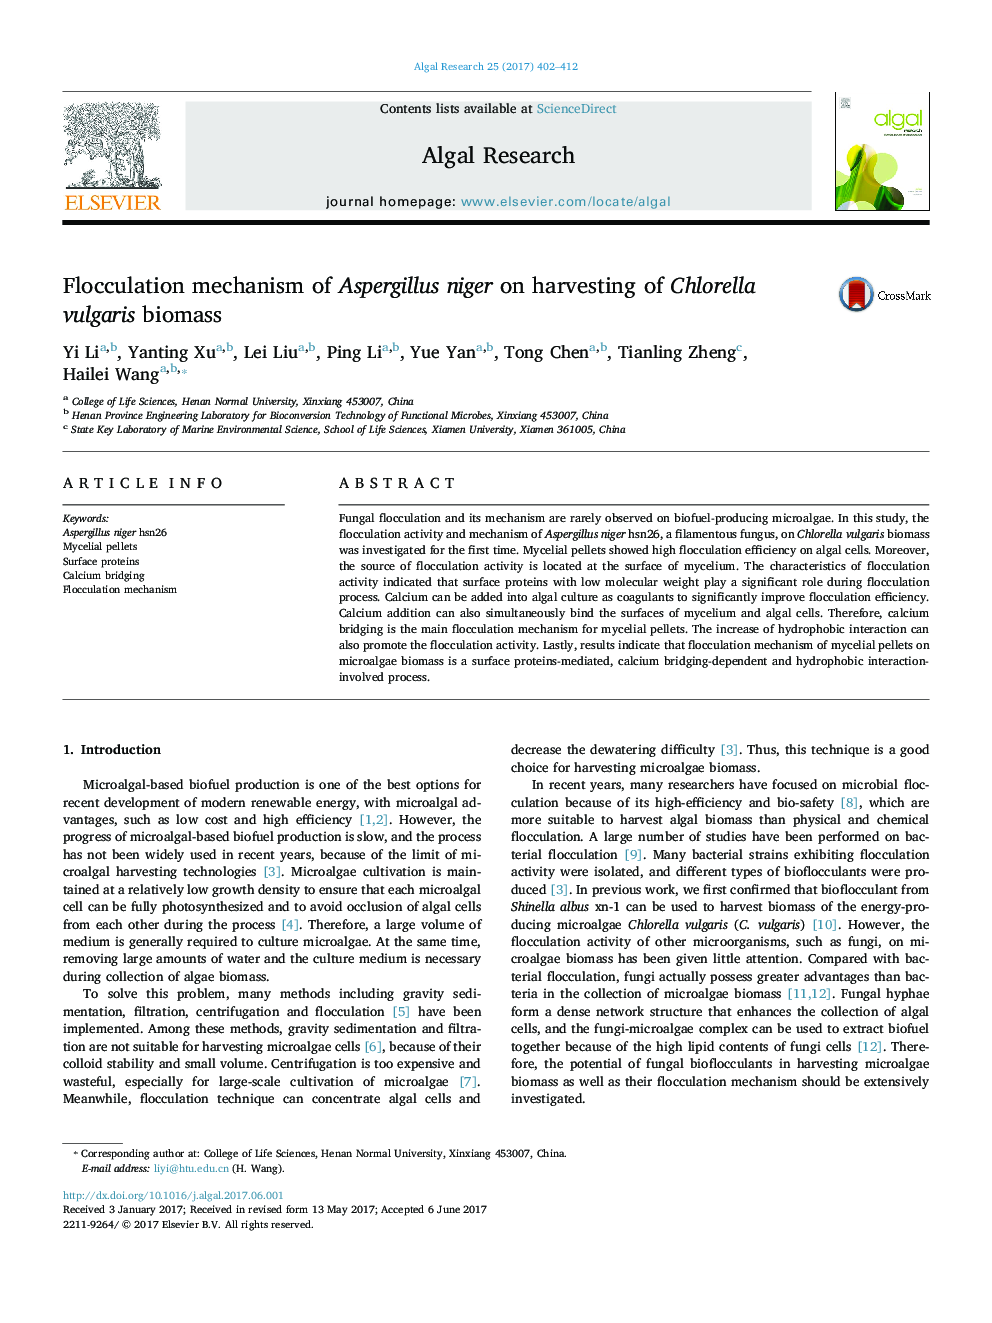 Flocculation mechanism of Aspergillus niger on harvesting of Chlorella vulgaris biomass